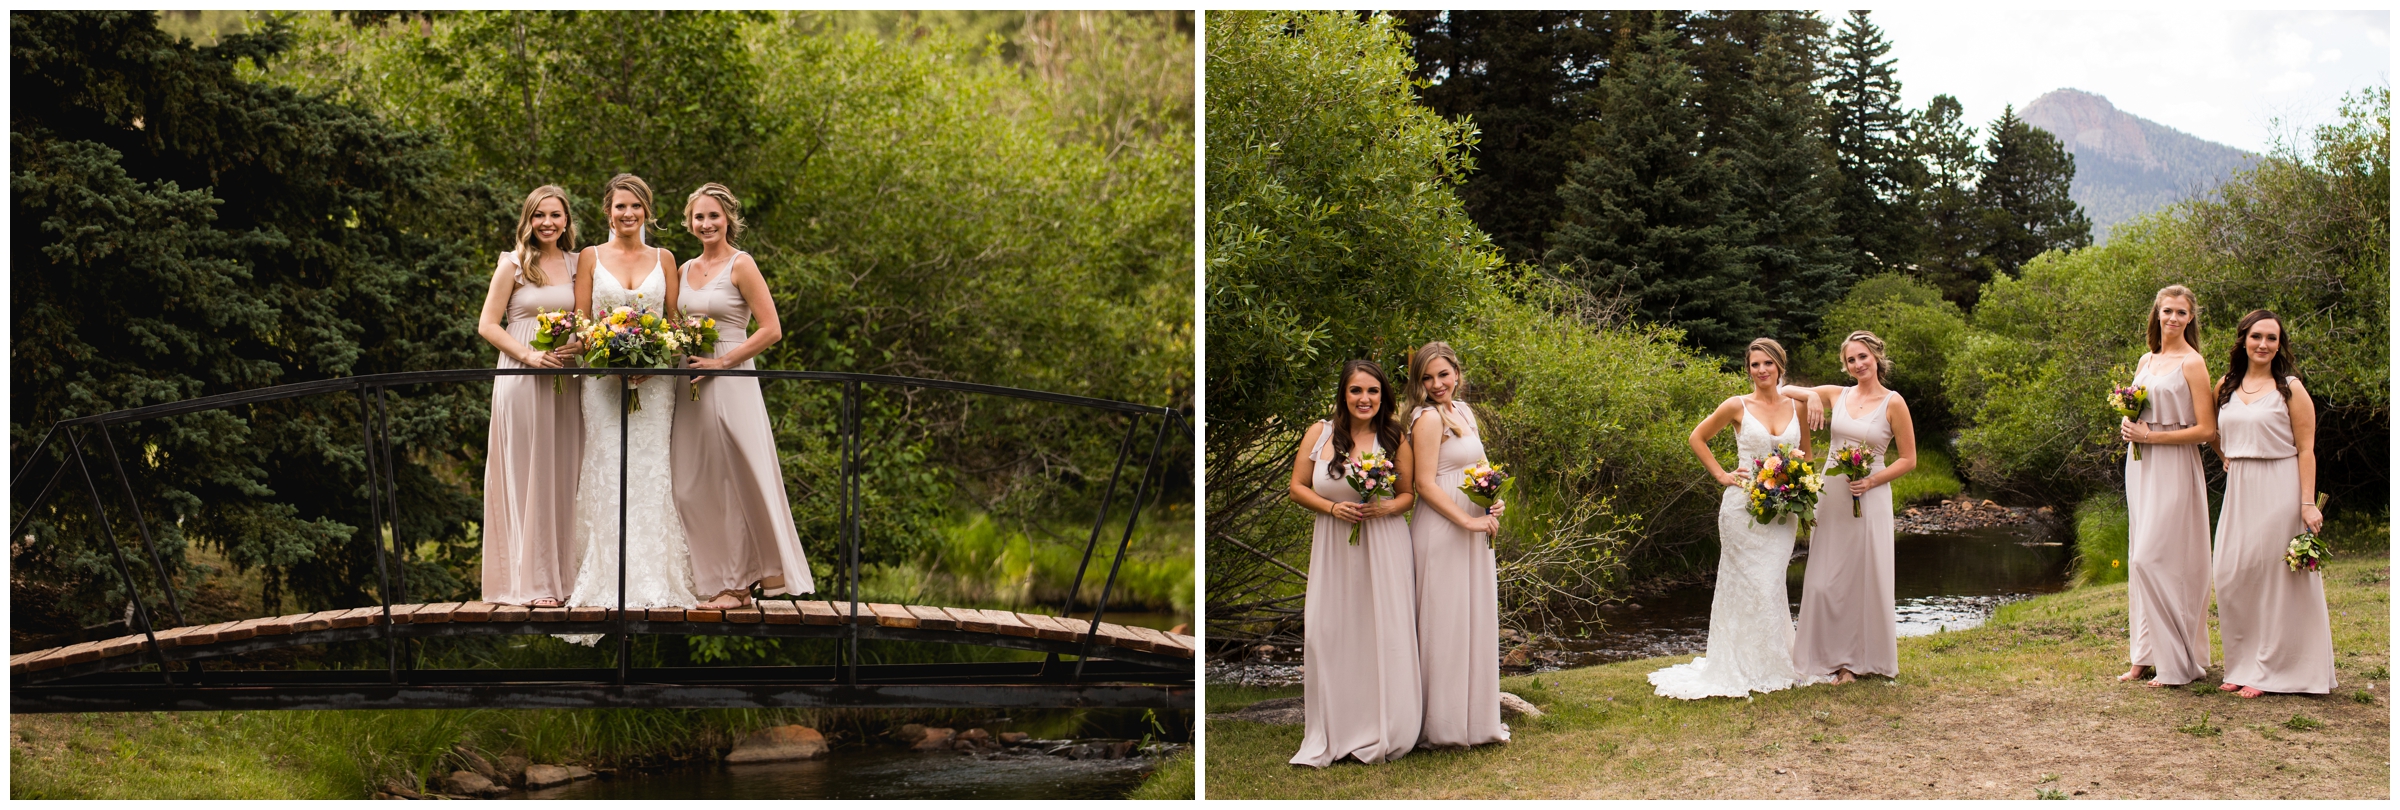 bridesmaids posing on bridge during Mountain View Ranch Wedgewood wedding portraits 